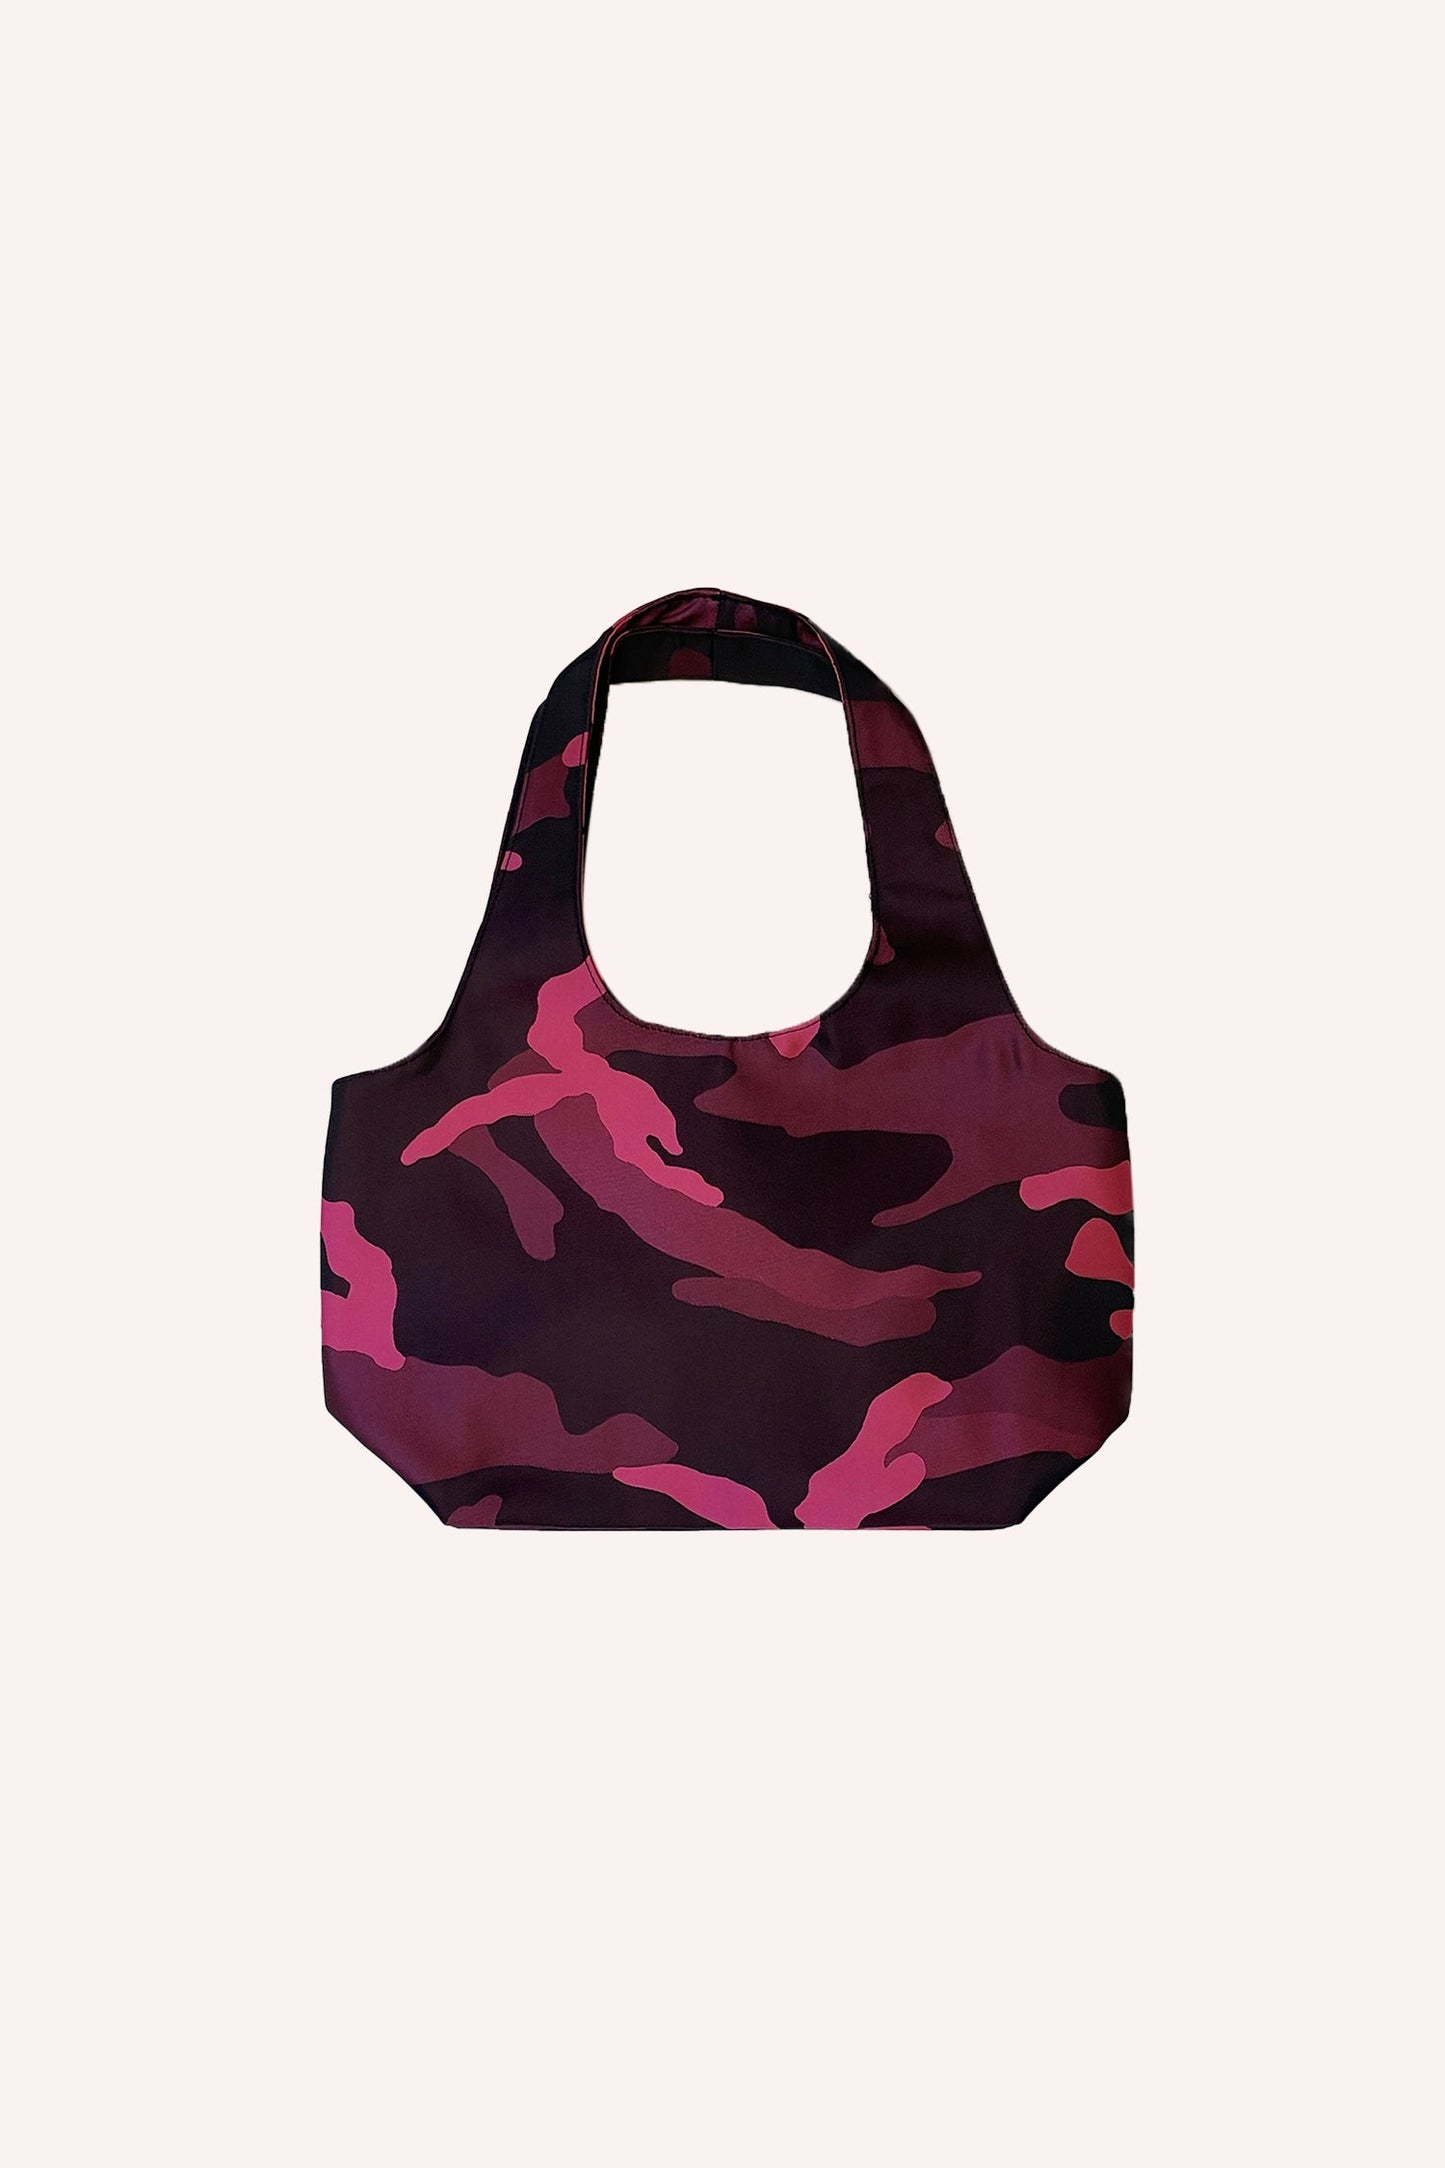 Mini Bag camouflage pattern dark/light hue of pink, rectangle shape, round handle